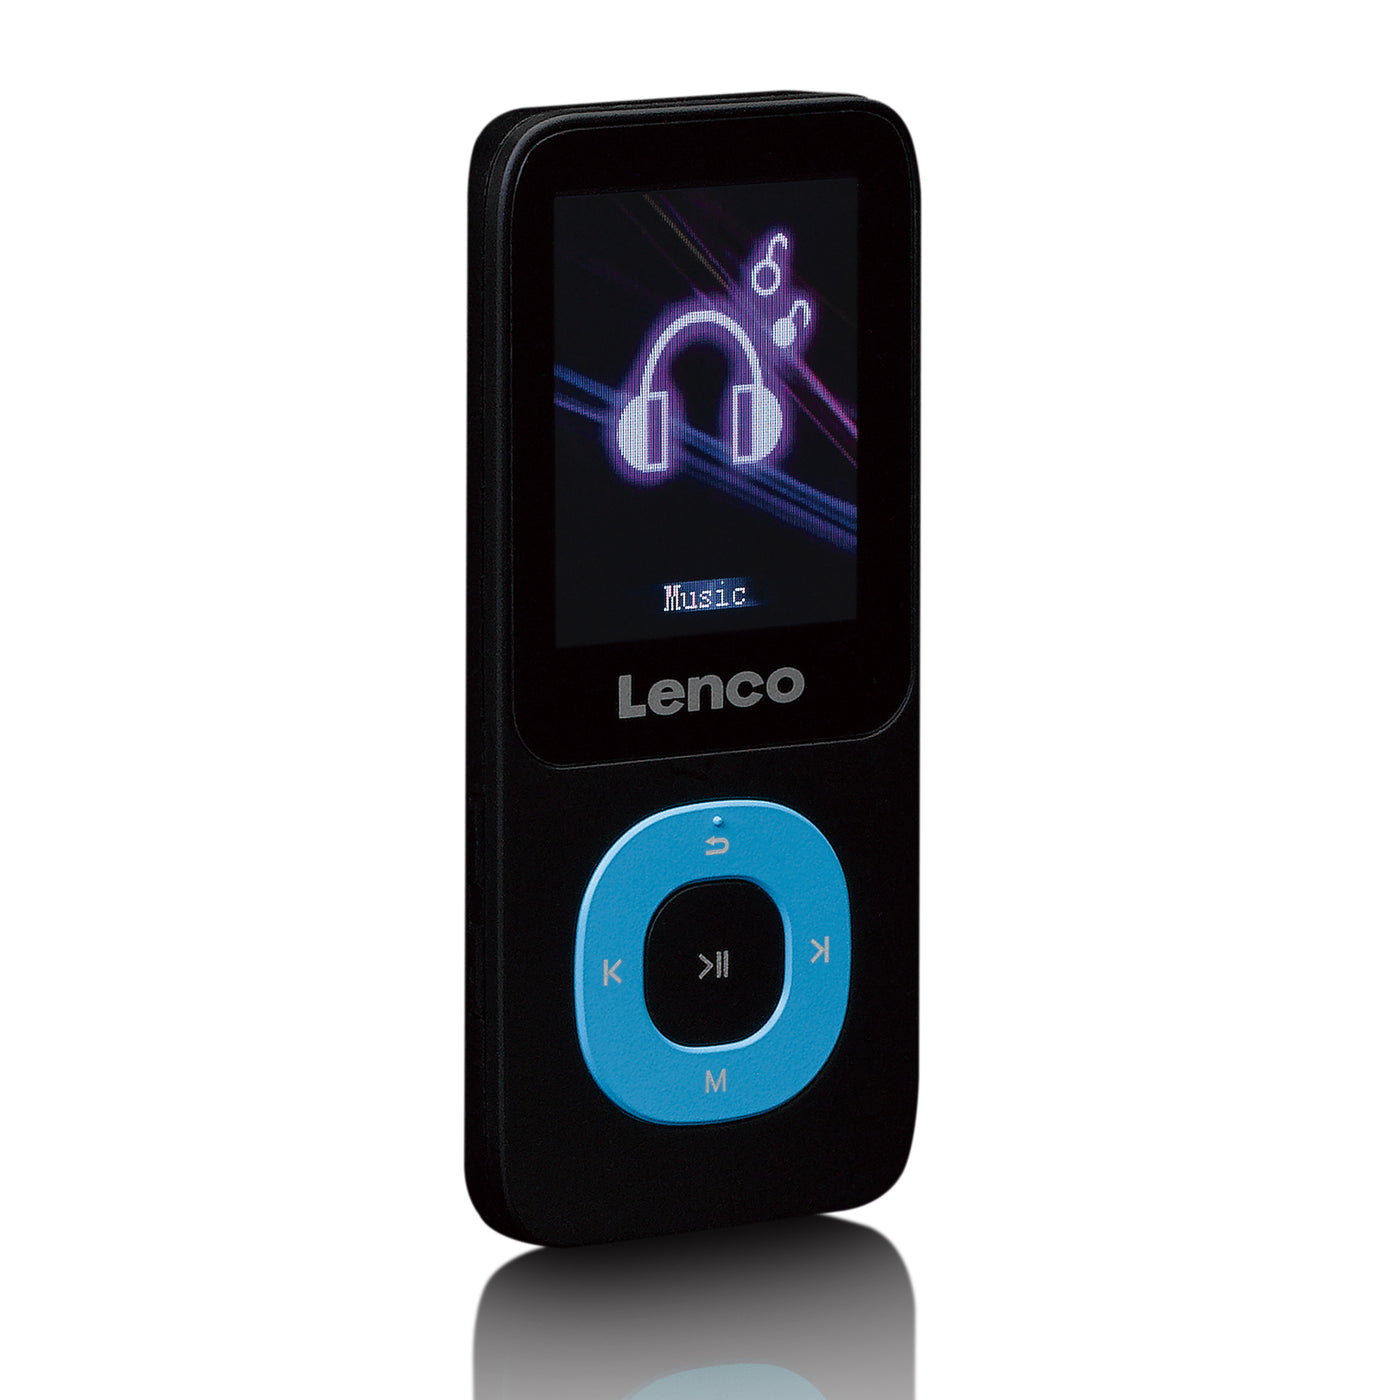 LENCO Xemio-659BU - MP3/MP4-speler met 4GB micro SD kaart, blauw